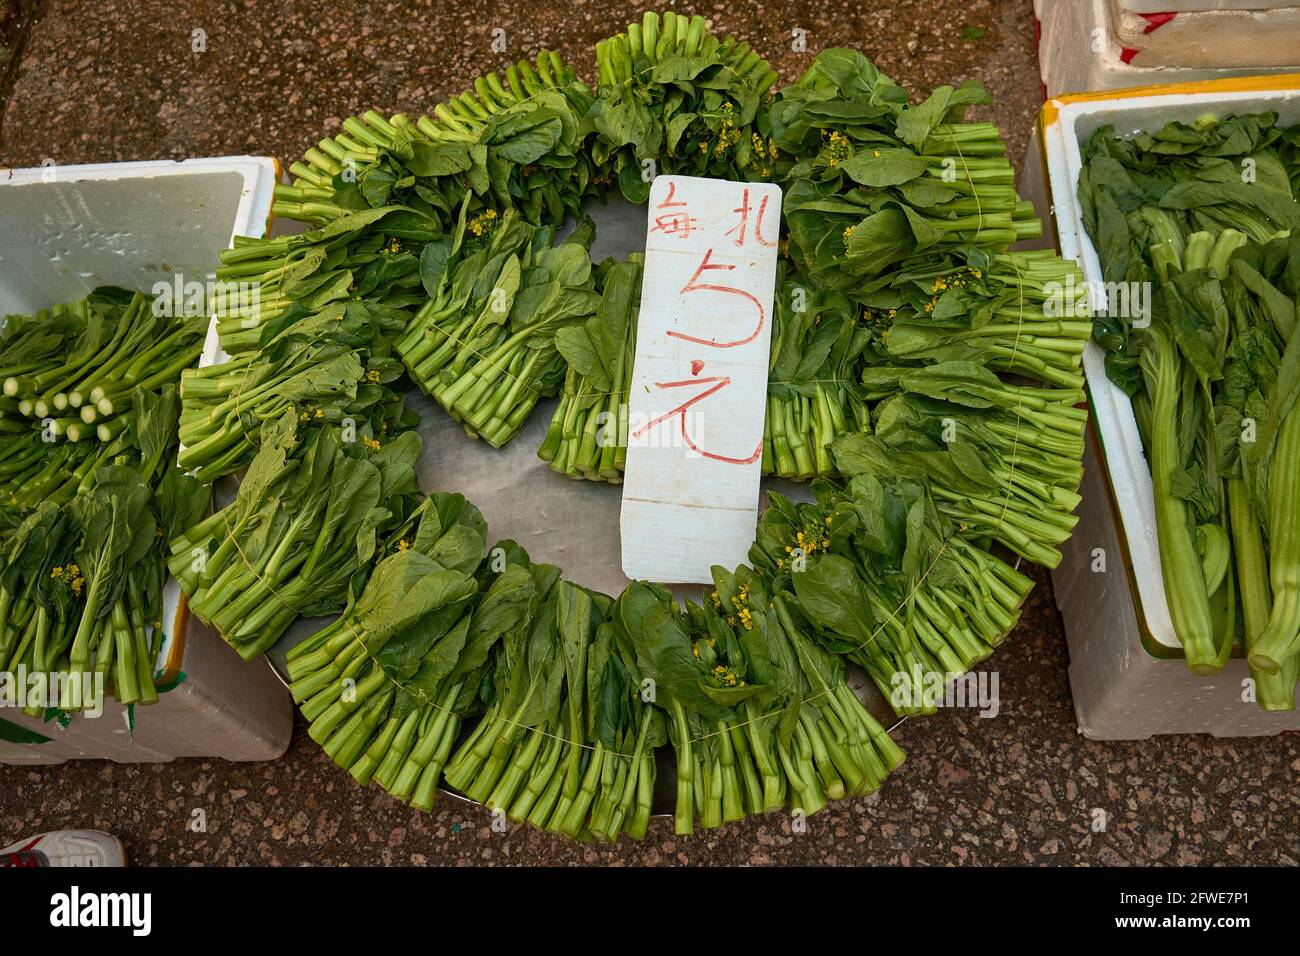 HONG KONG -Close up details of choy sum vegetables taken at a fresh produce market in Hong Kong. Stock Photo